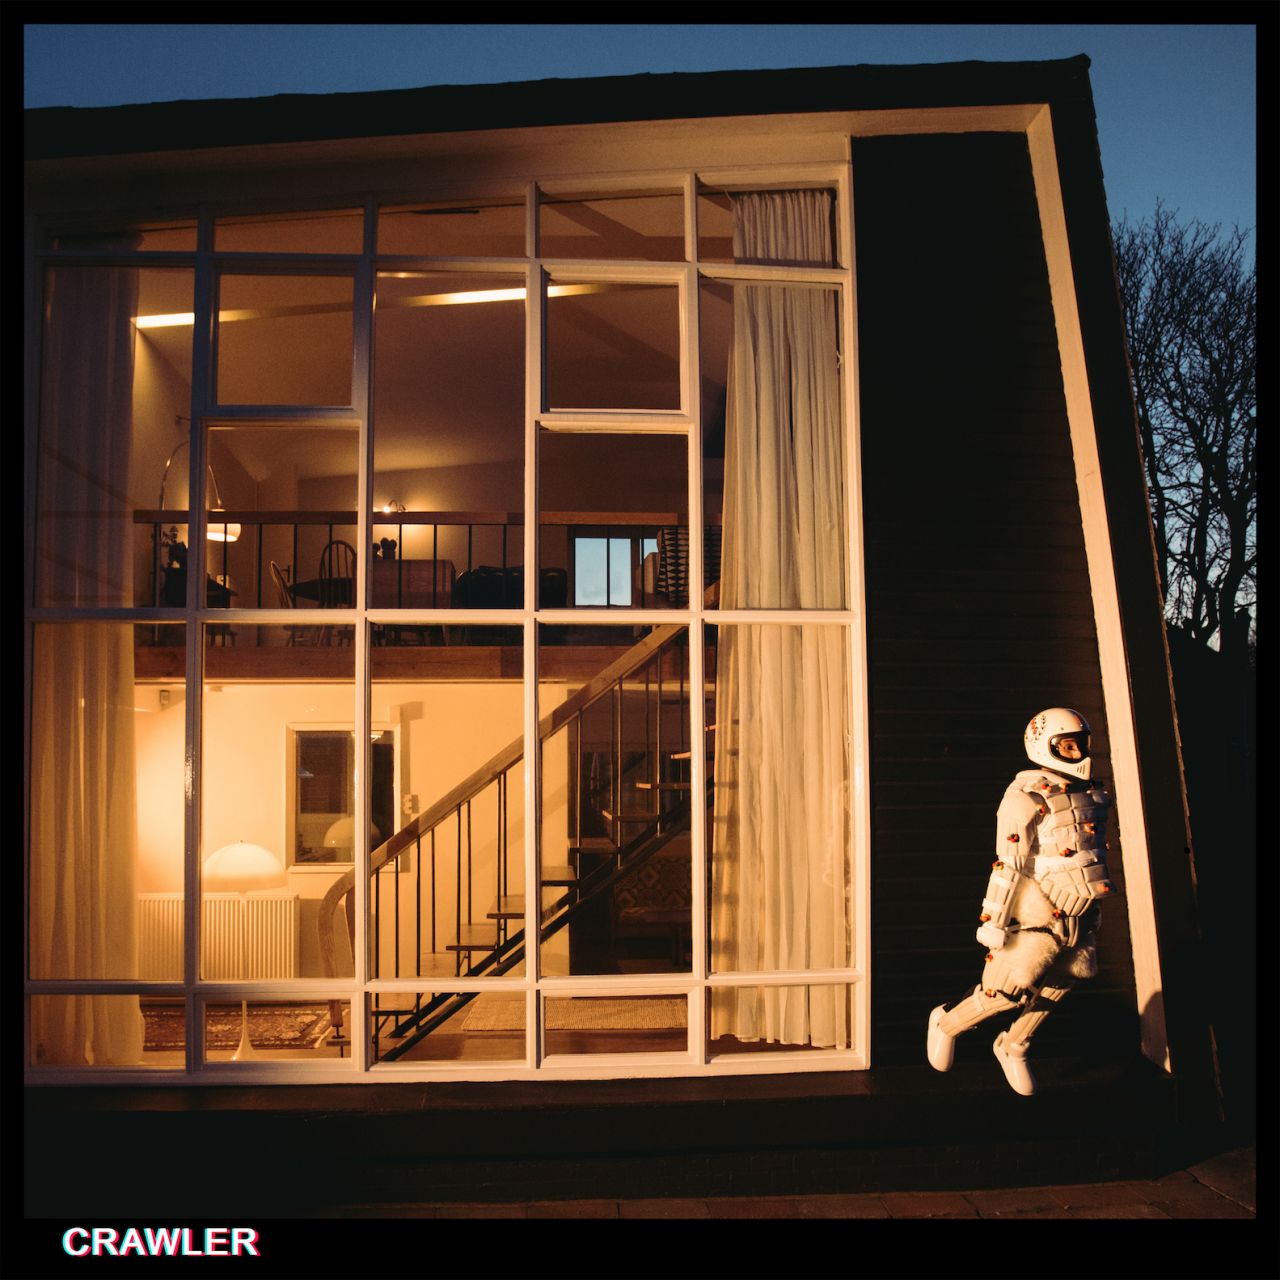 Idles - Crawler - LP